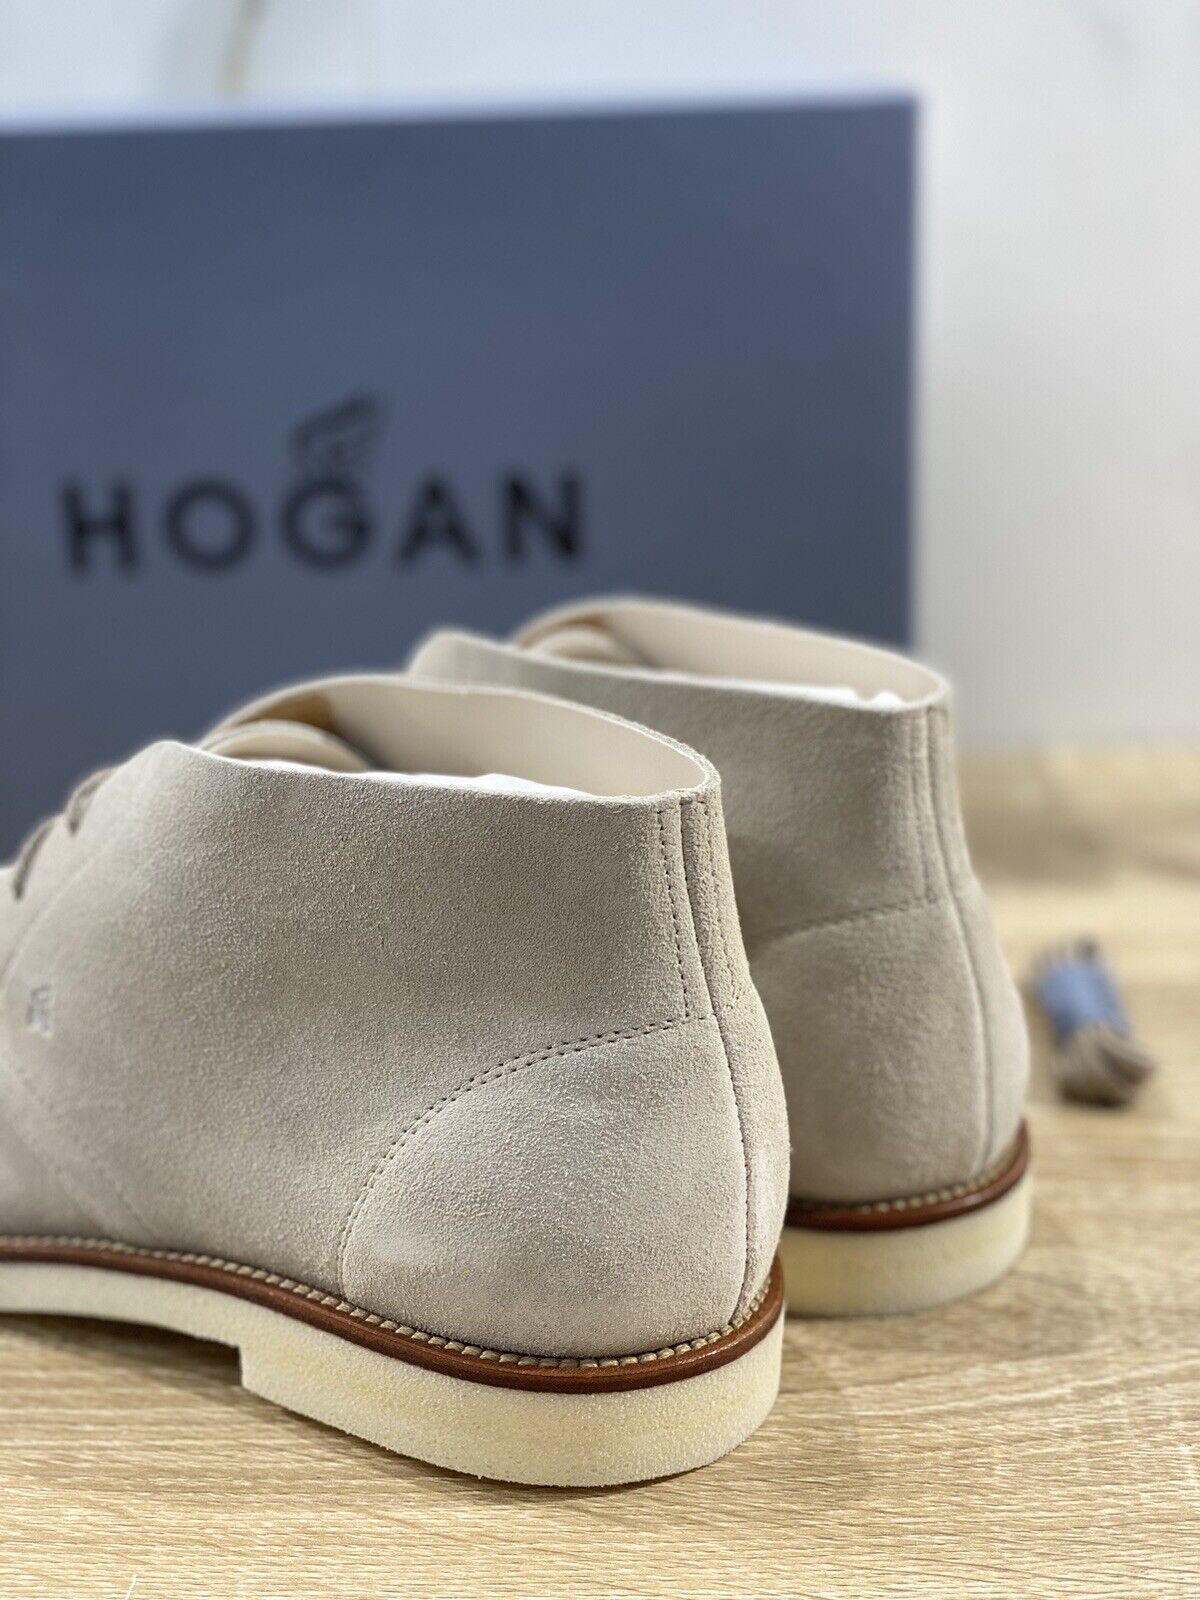 Hogan Polacchino uomo business casual suede naturale hogan men shoe 43